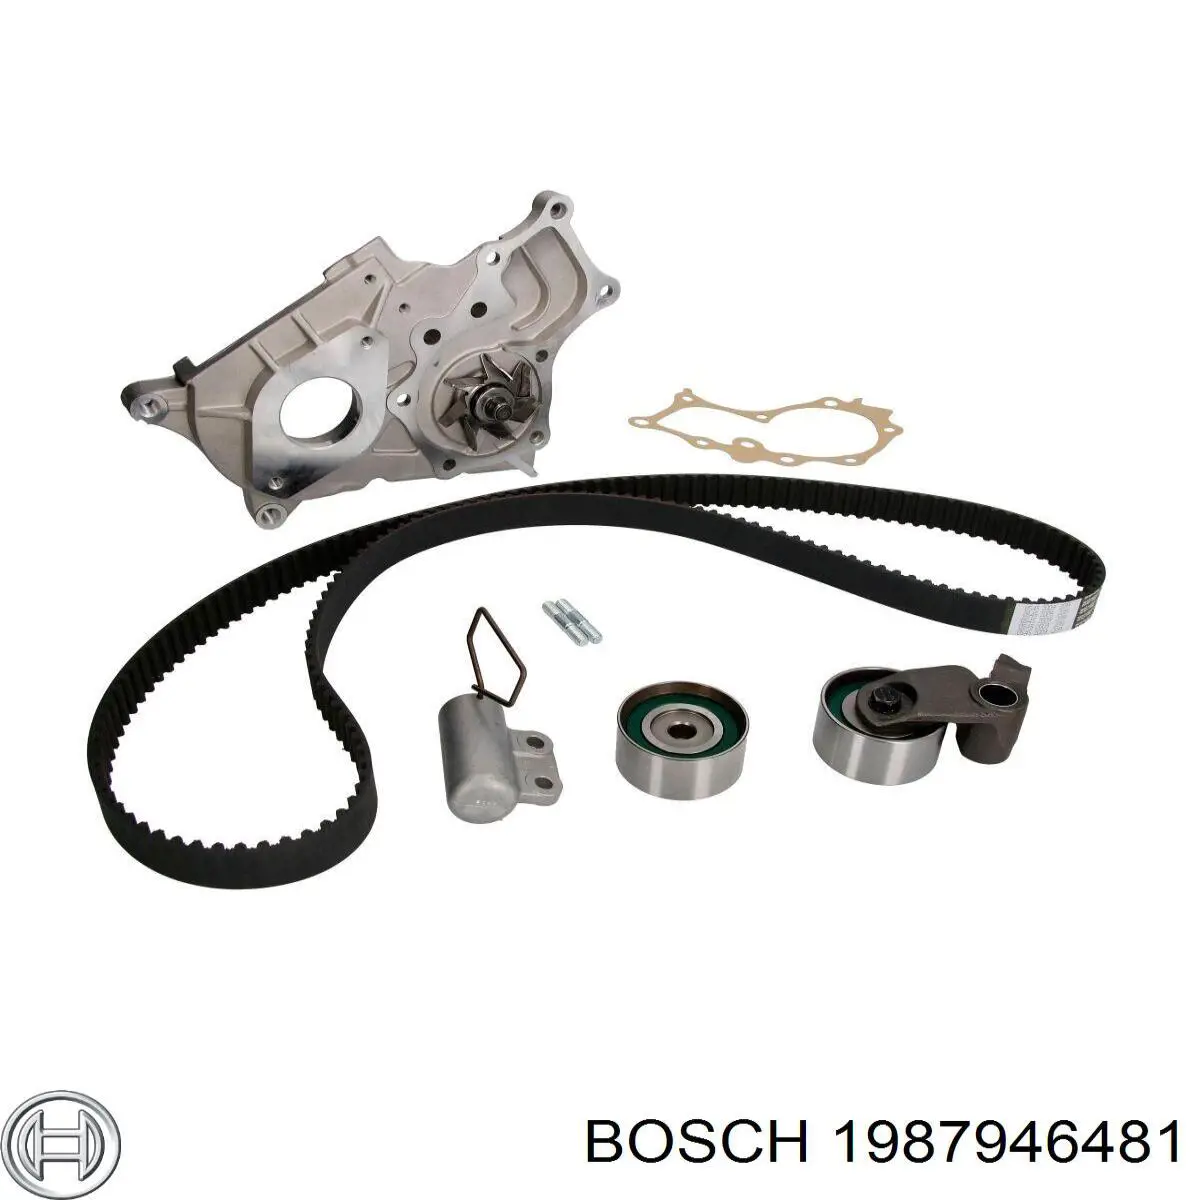 1987946481 Bosch kit de correa de distribución